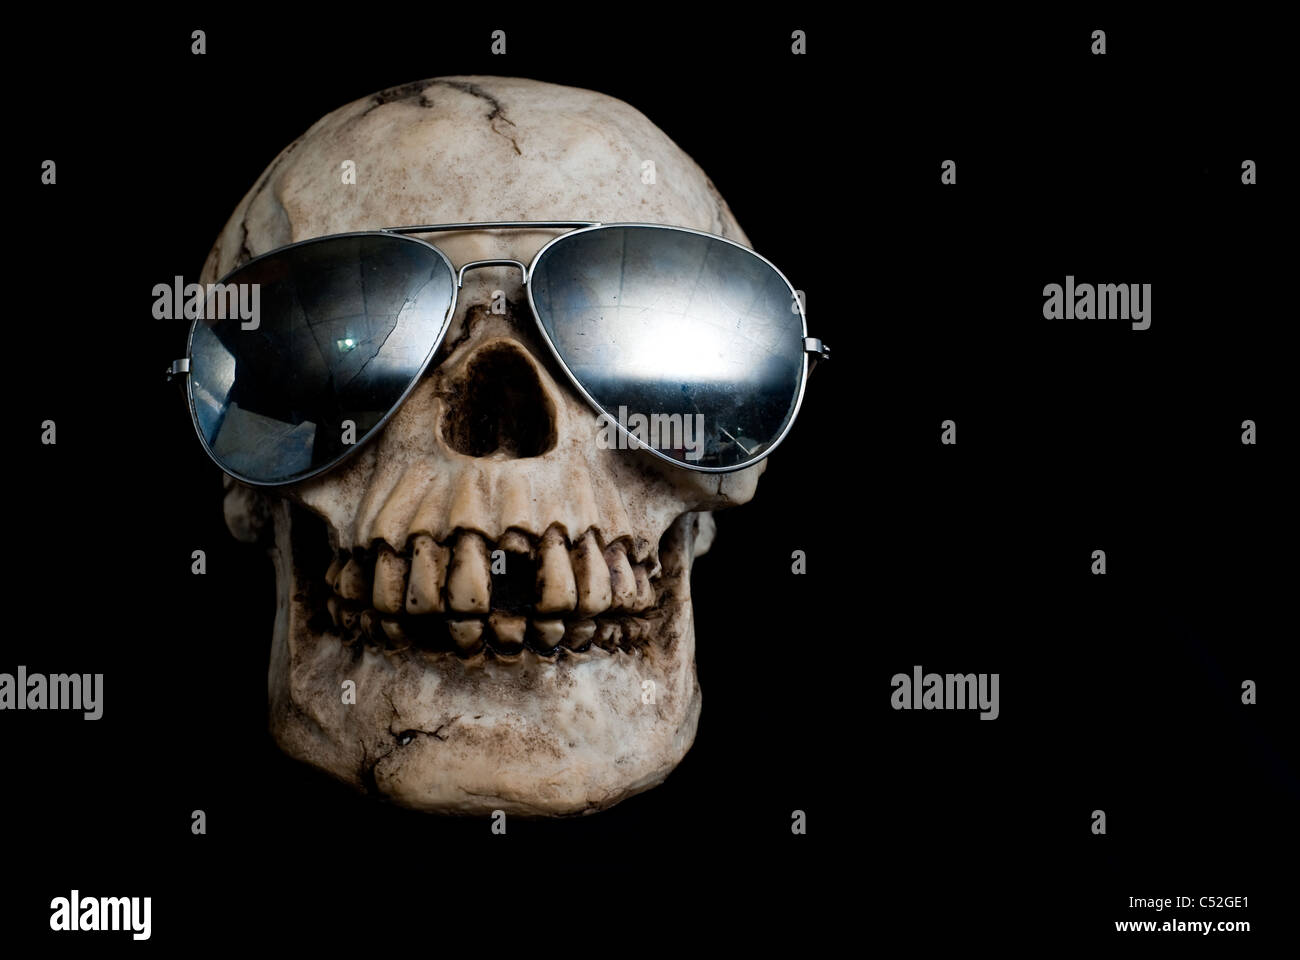 An old, human skull wearing mirrored aviator type sunglasses. Stock Photo